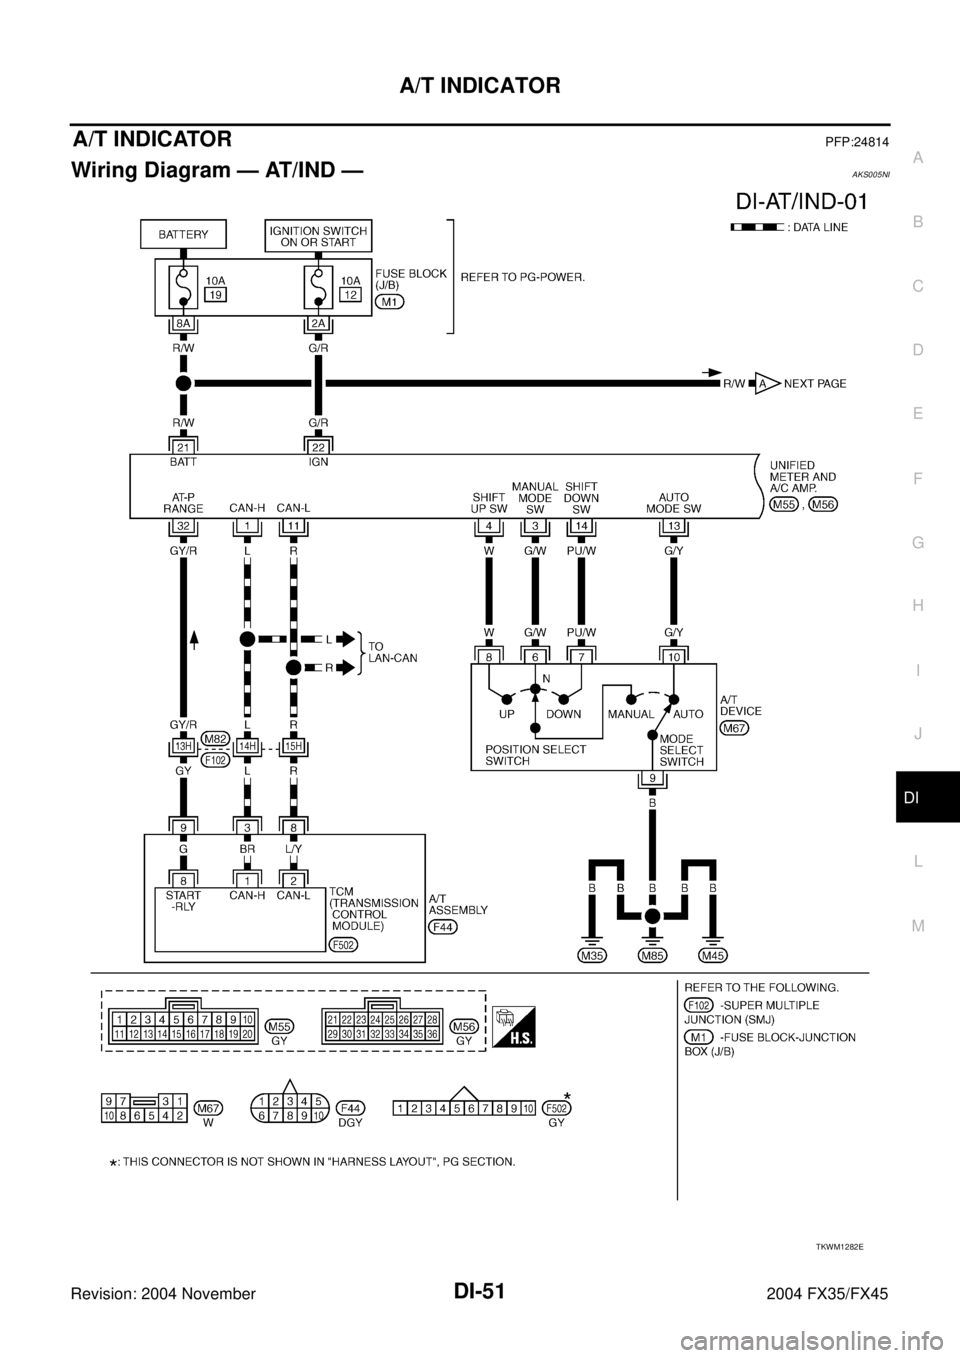 INFINITI FX35 2004  Service Manual A/T INDICATOR
DI-51
C
D
E
F
G
H
I
J
L
MA
B
DI
Revision: 2004 November 2004 FX35/FX45
A/T INDICATORPFP:24814
Wiring Diagram — AT/IND —AKS005NI
TKWM1282E 